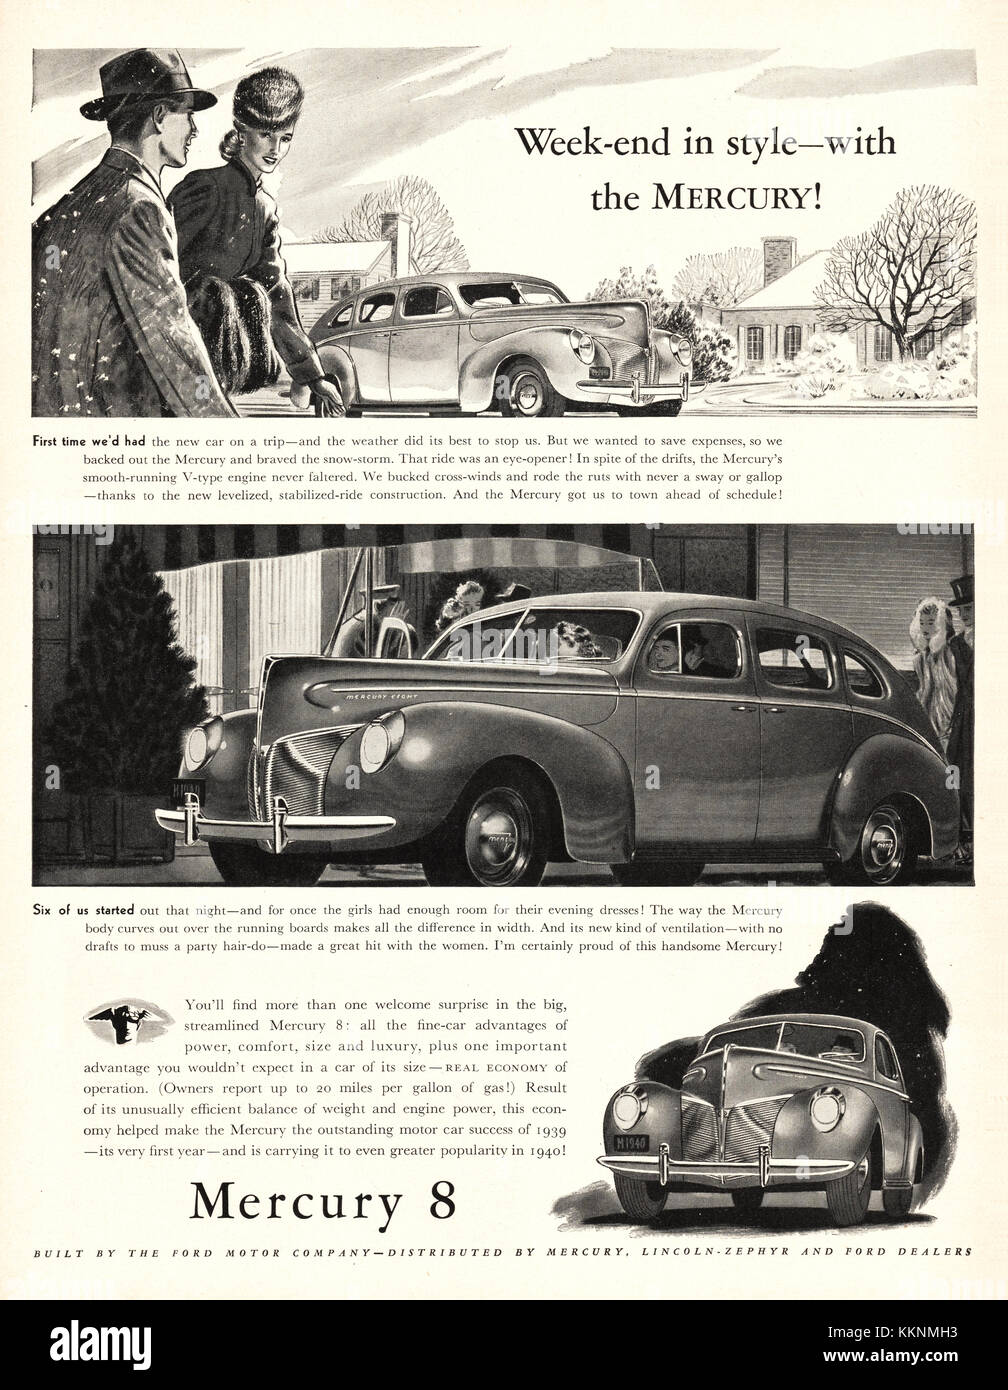 1940 U.S. Magazine Mercury 8 Cars Advert Stock Photo